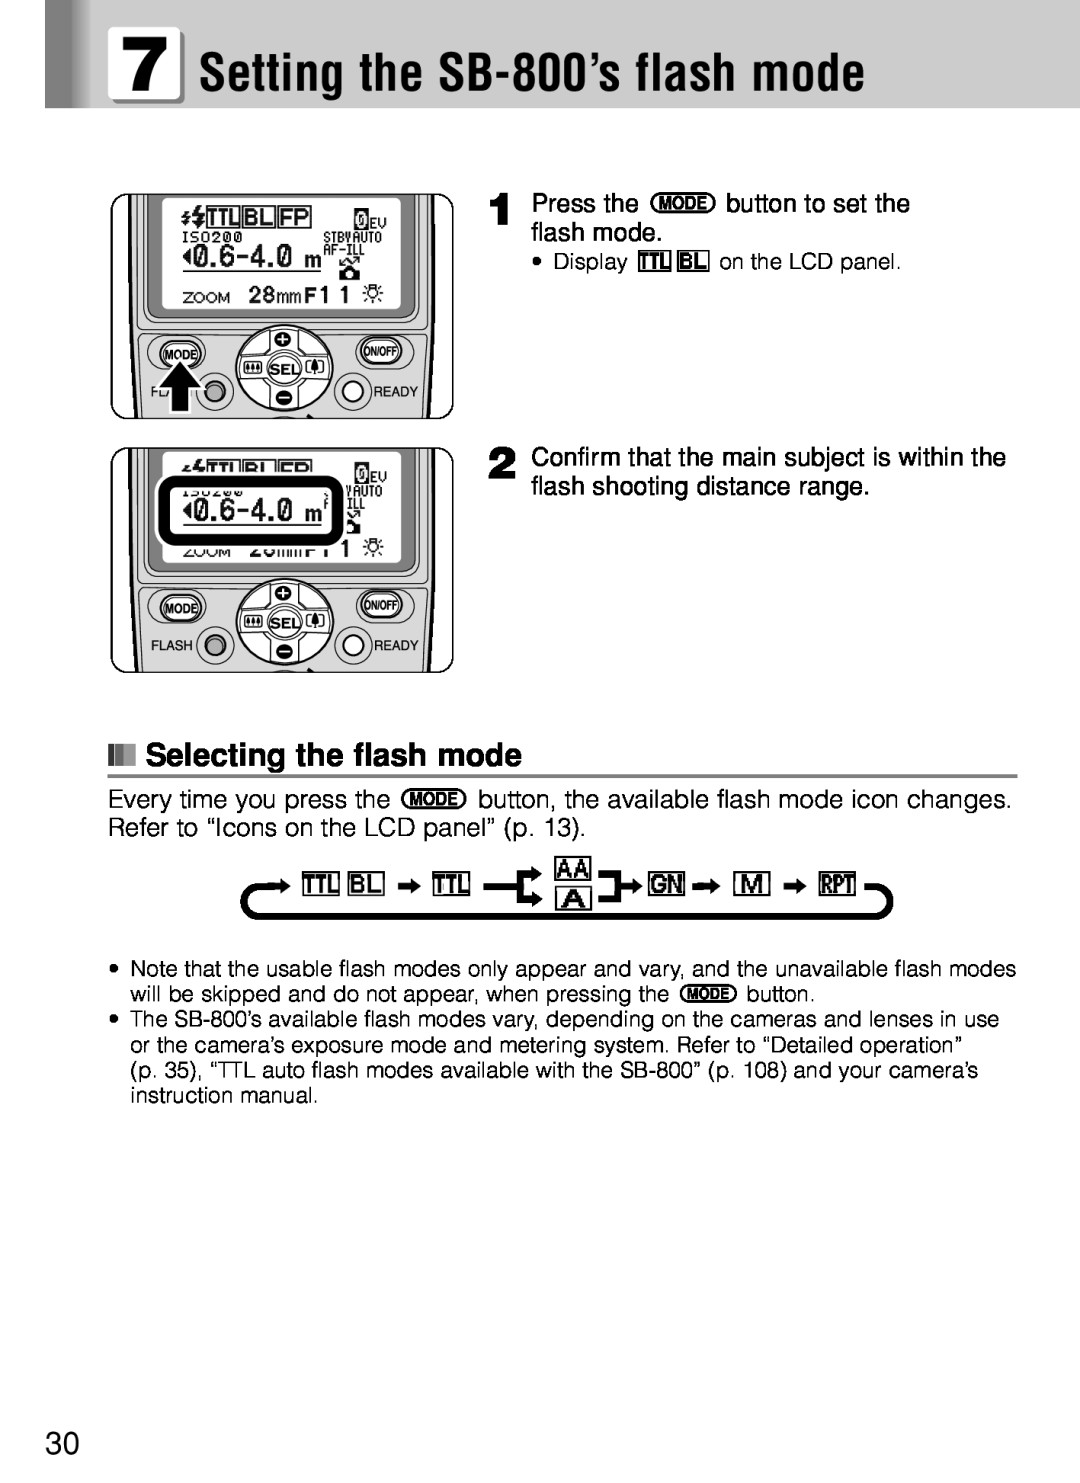 Nikon instruction manual Setting the SB-800’s flash mode, Selecting the flash mode 